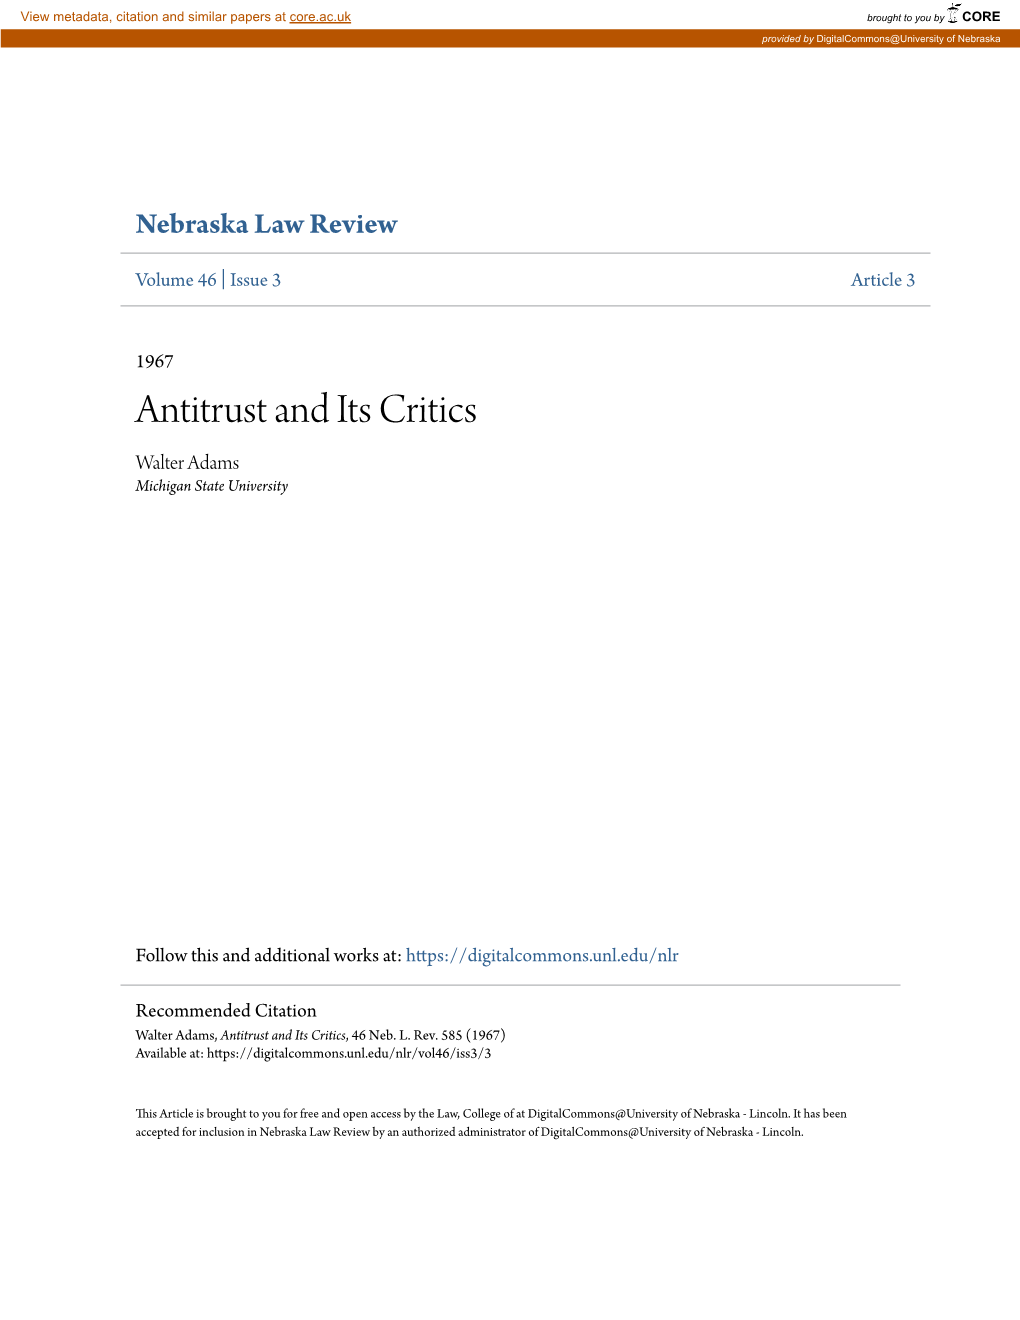 Antitrust and Its Critics Walter Adams Michigan State University